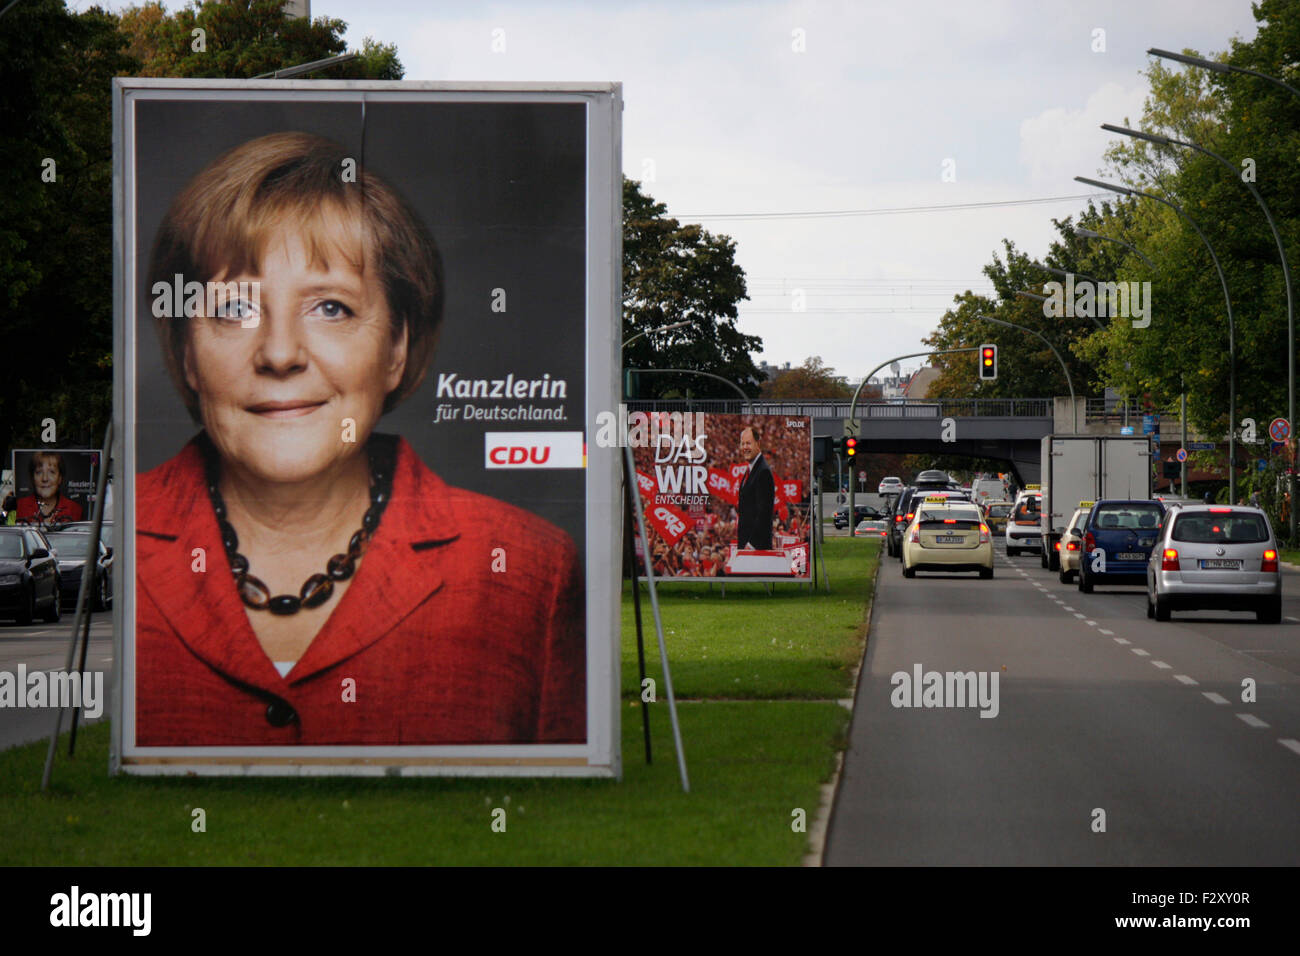 Wahlplakate zur Bundestagswahl 2013: Angela Merkel, Peer Steinbrueck, 13. September 2013, Grosser Stern, Berlin-Tiergarten. Stock Photo